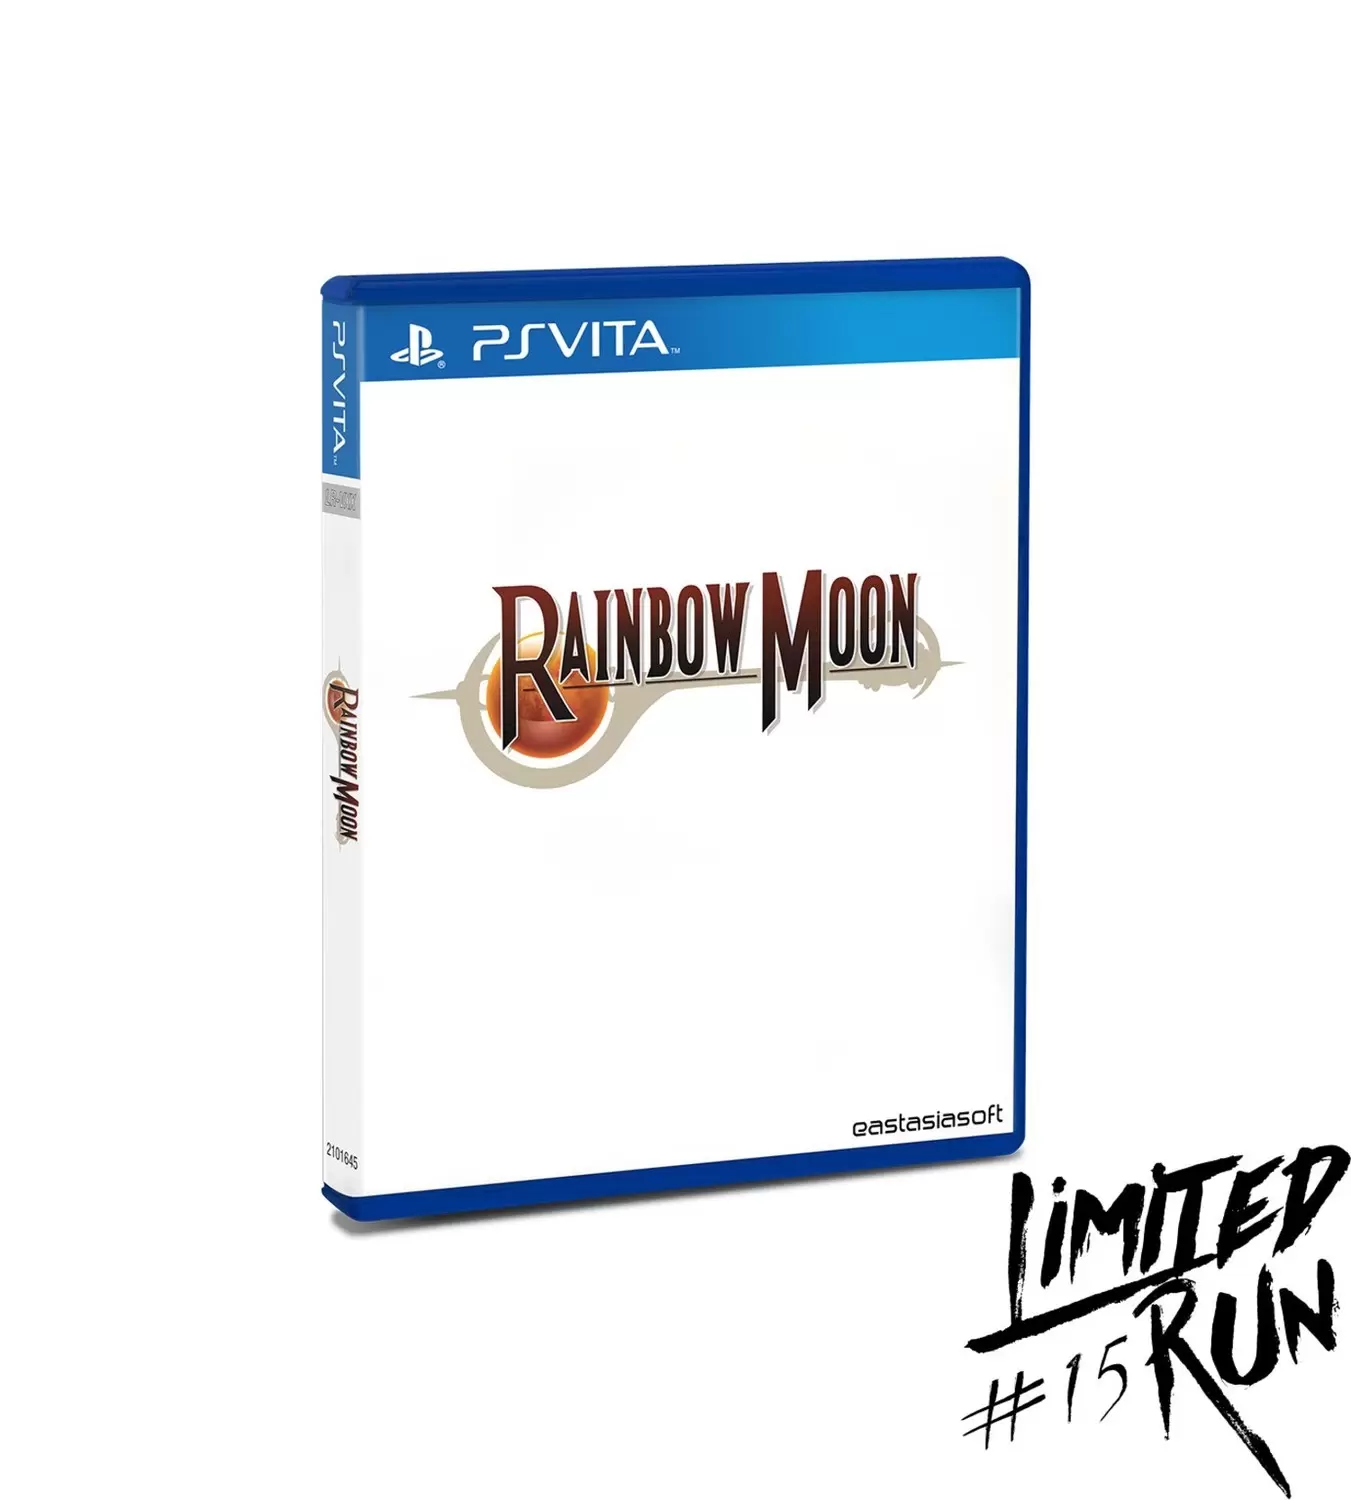 PS Vita Games - Rainbow Moon